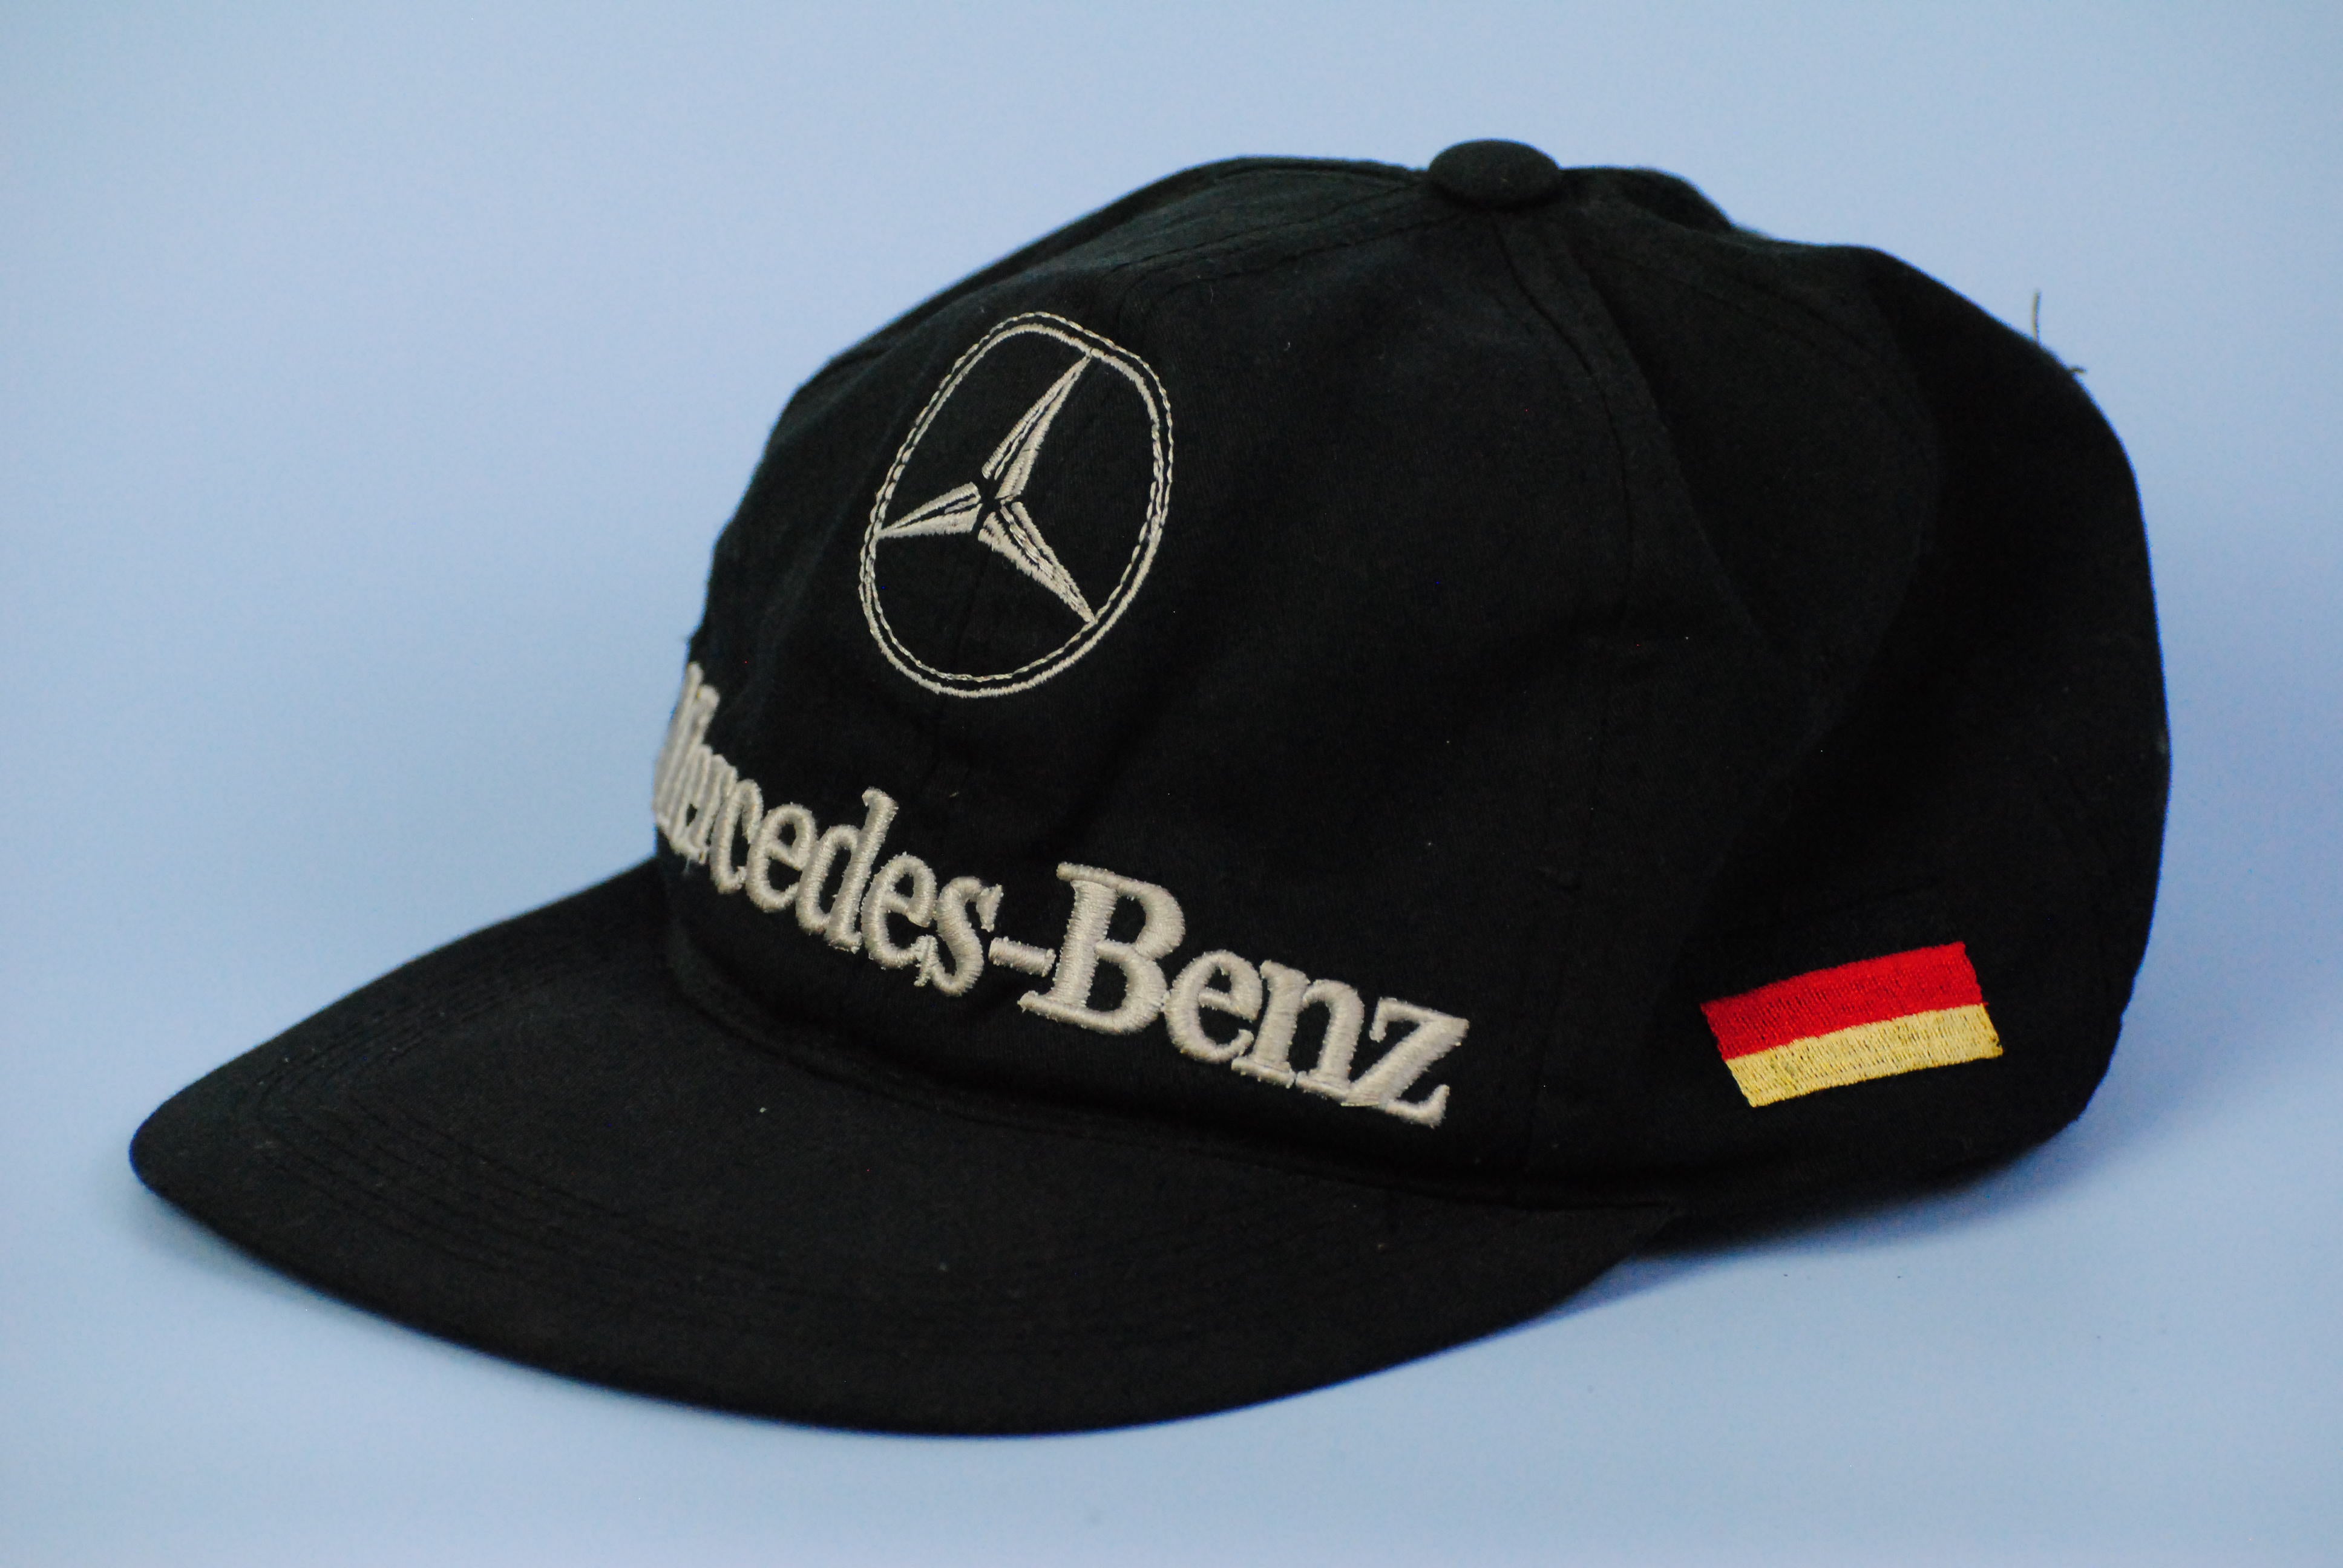 Mercedes Benz  Vintage cap